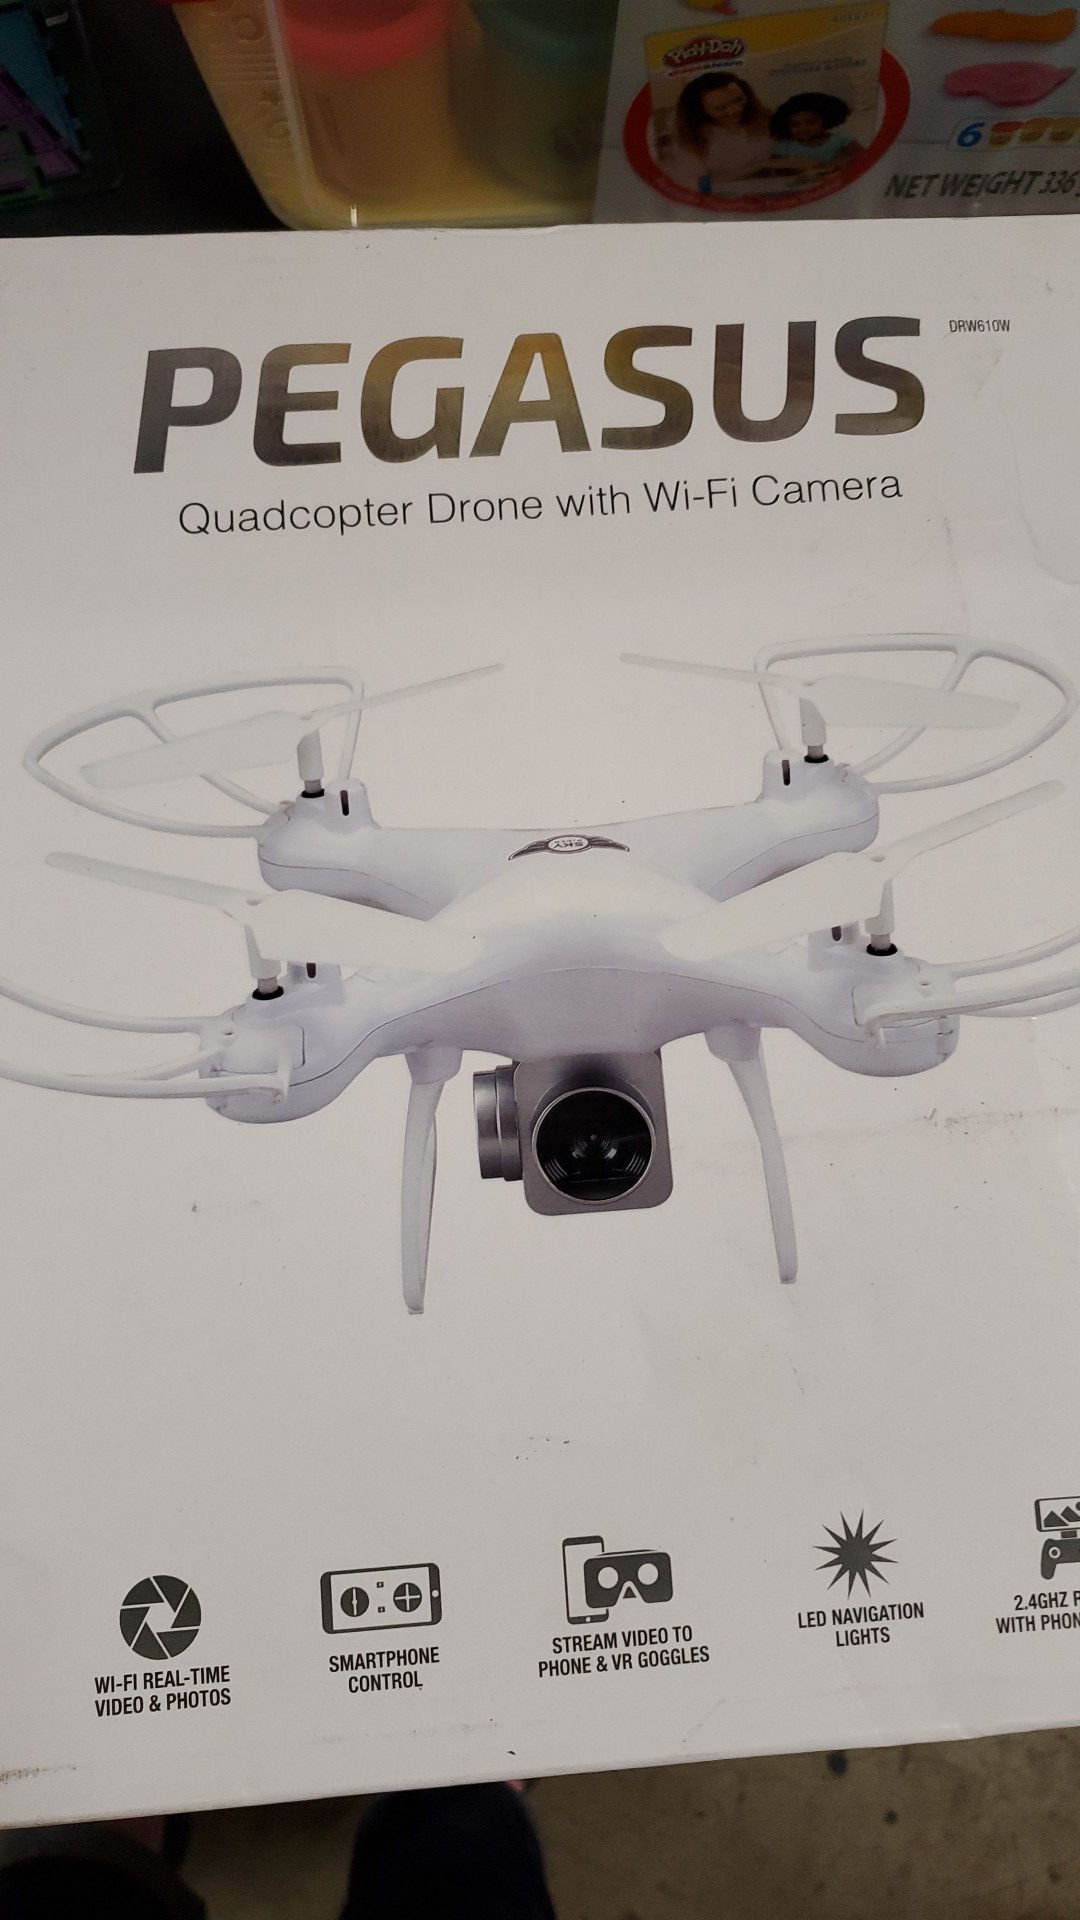 Pegasus quadcopter drone with Wi-Fi camera